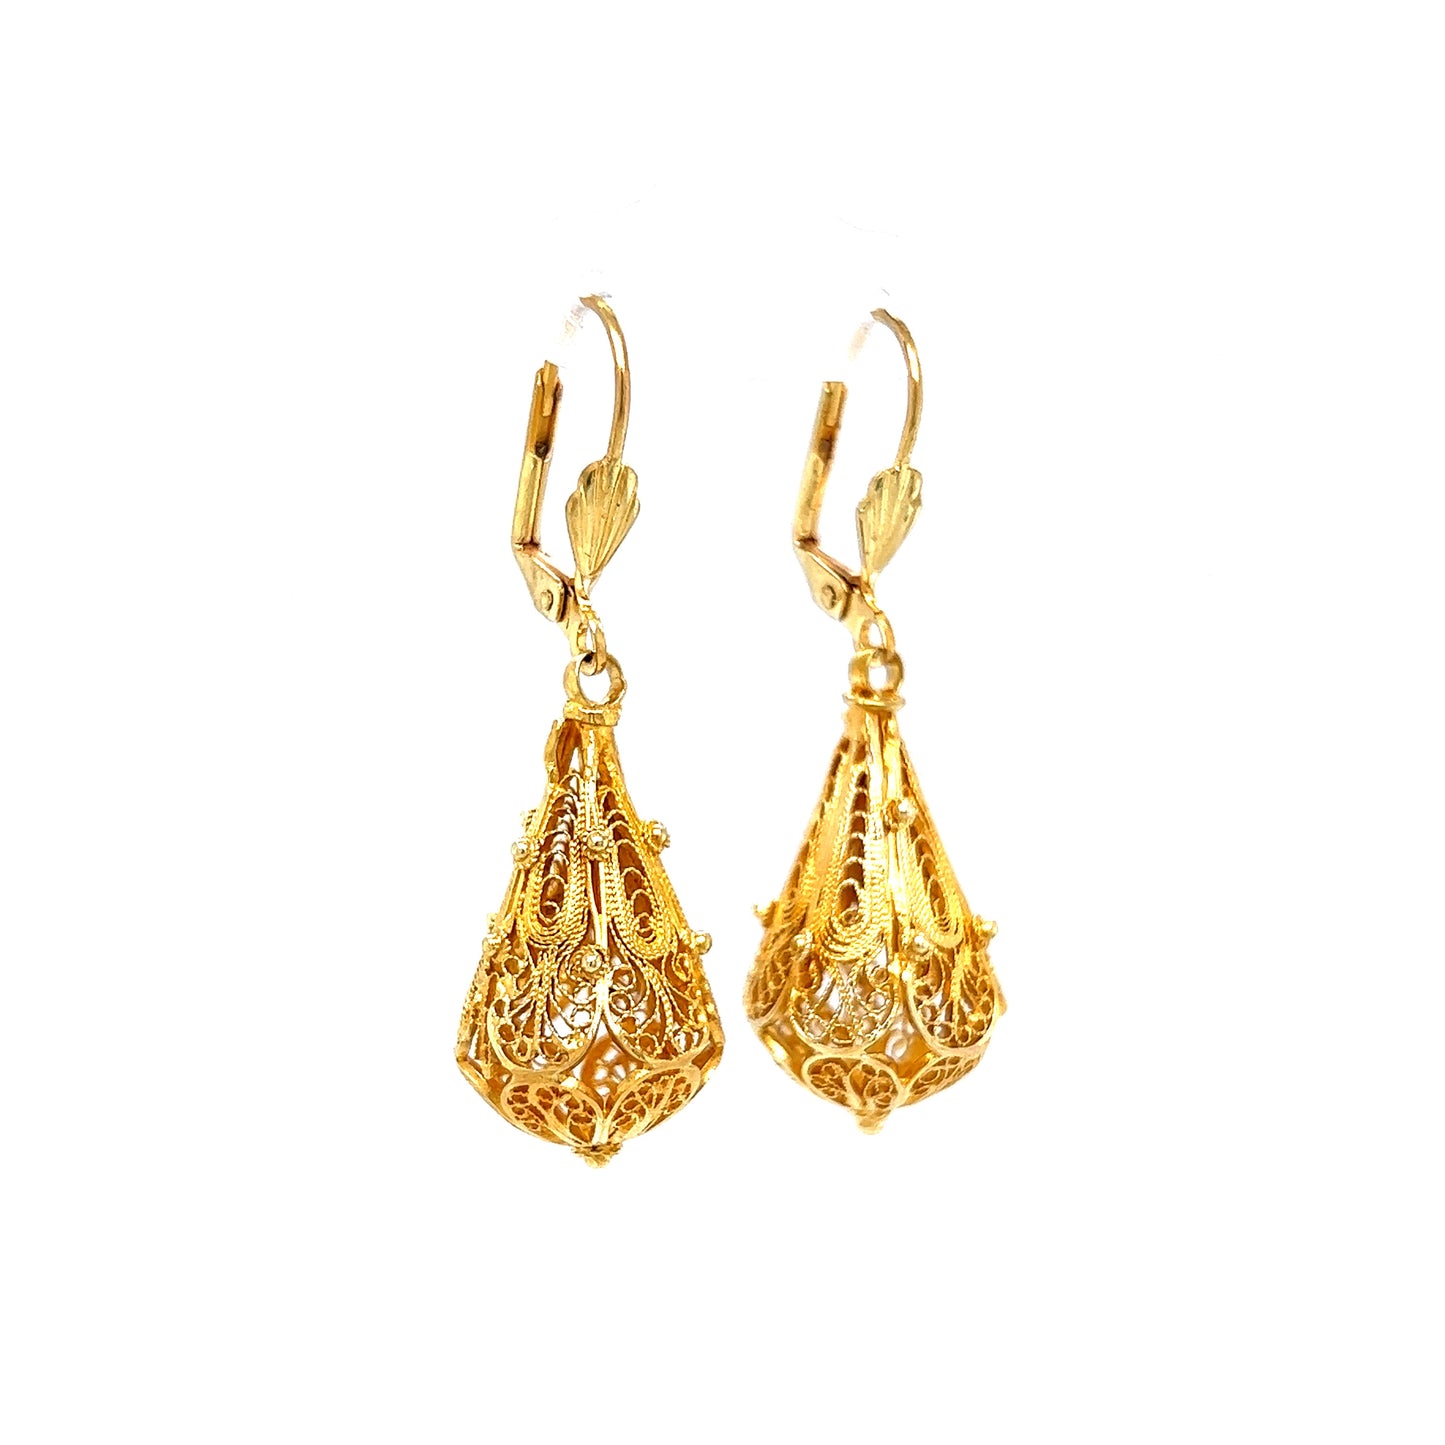 Intricate Filigree Mid-Century Drop Earrings in 14k Yellow Gold